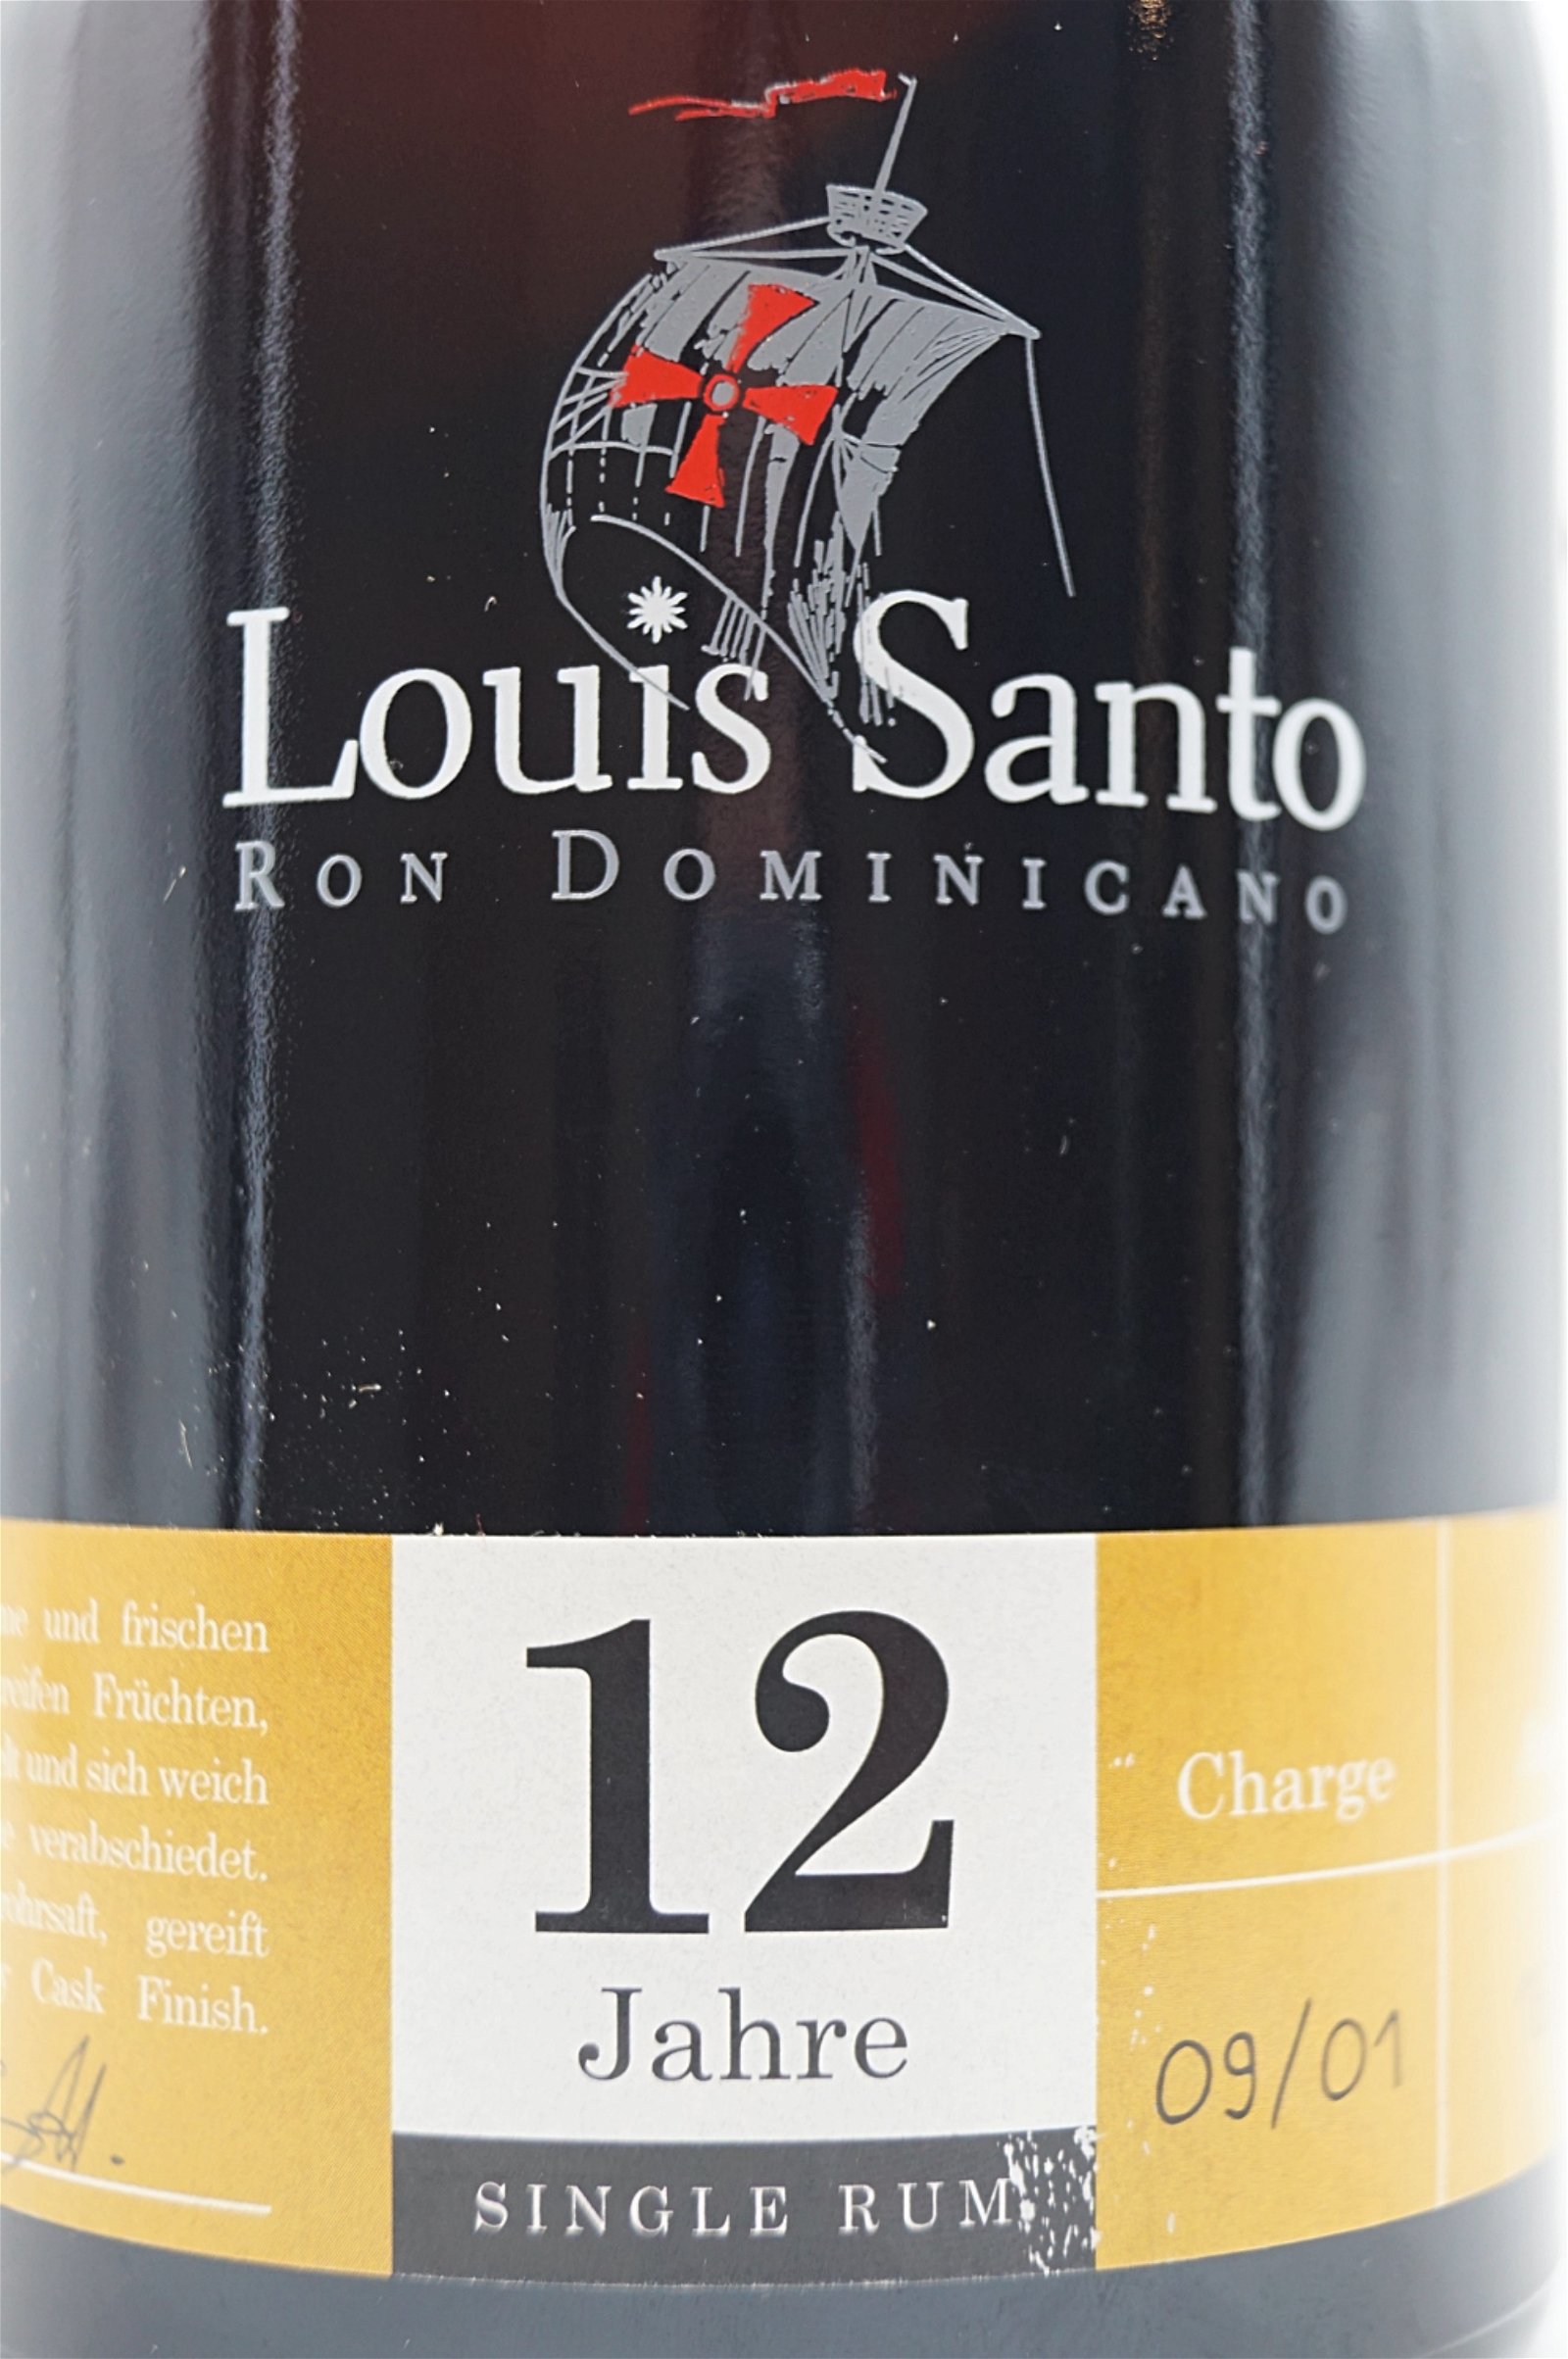 Louis Santo 12 Jahre Single Rum Charge 09/01